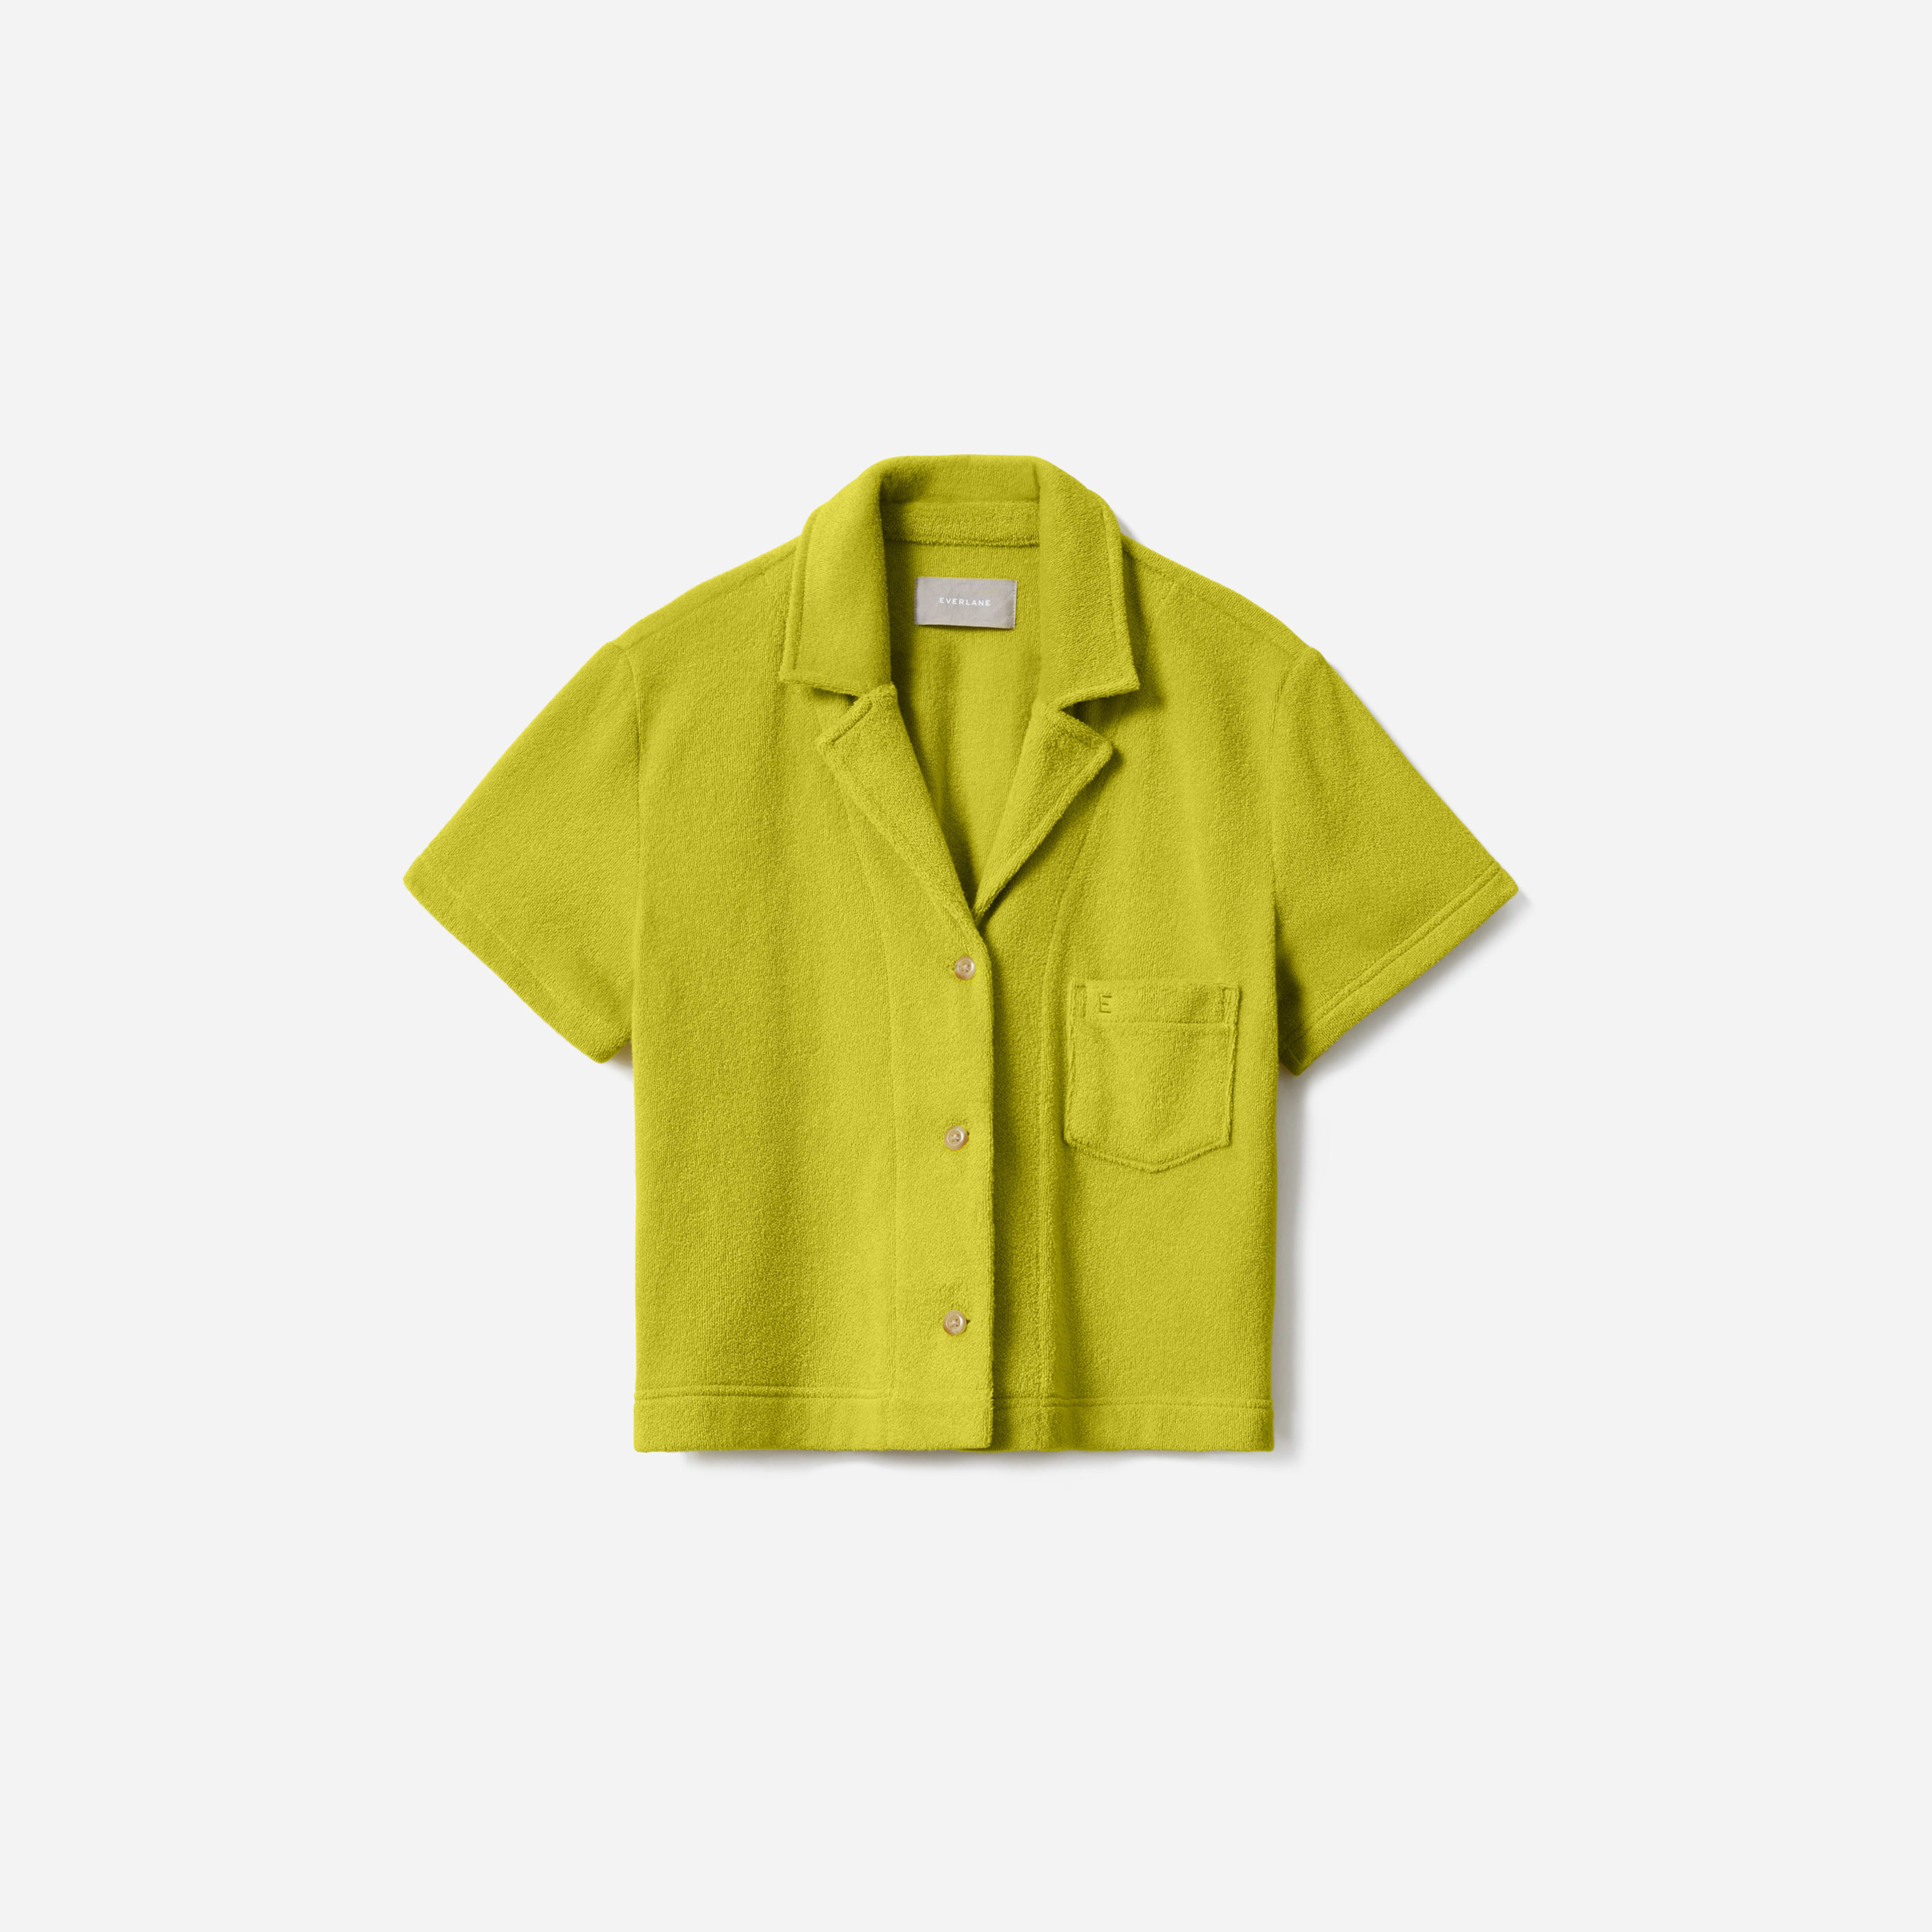 The Terry Cloth Notch Shirt Key Lime – Everlane